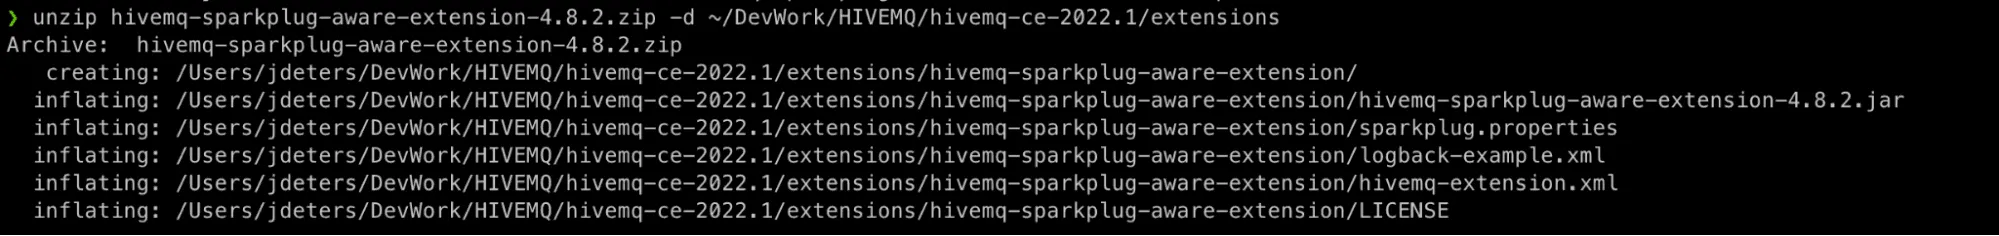 unzipped into HiveMQ CE’s extensions folder